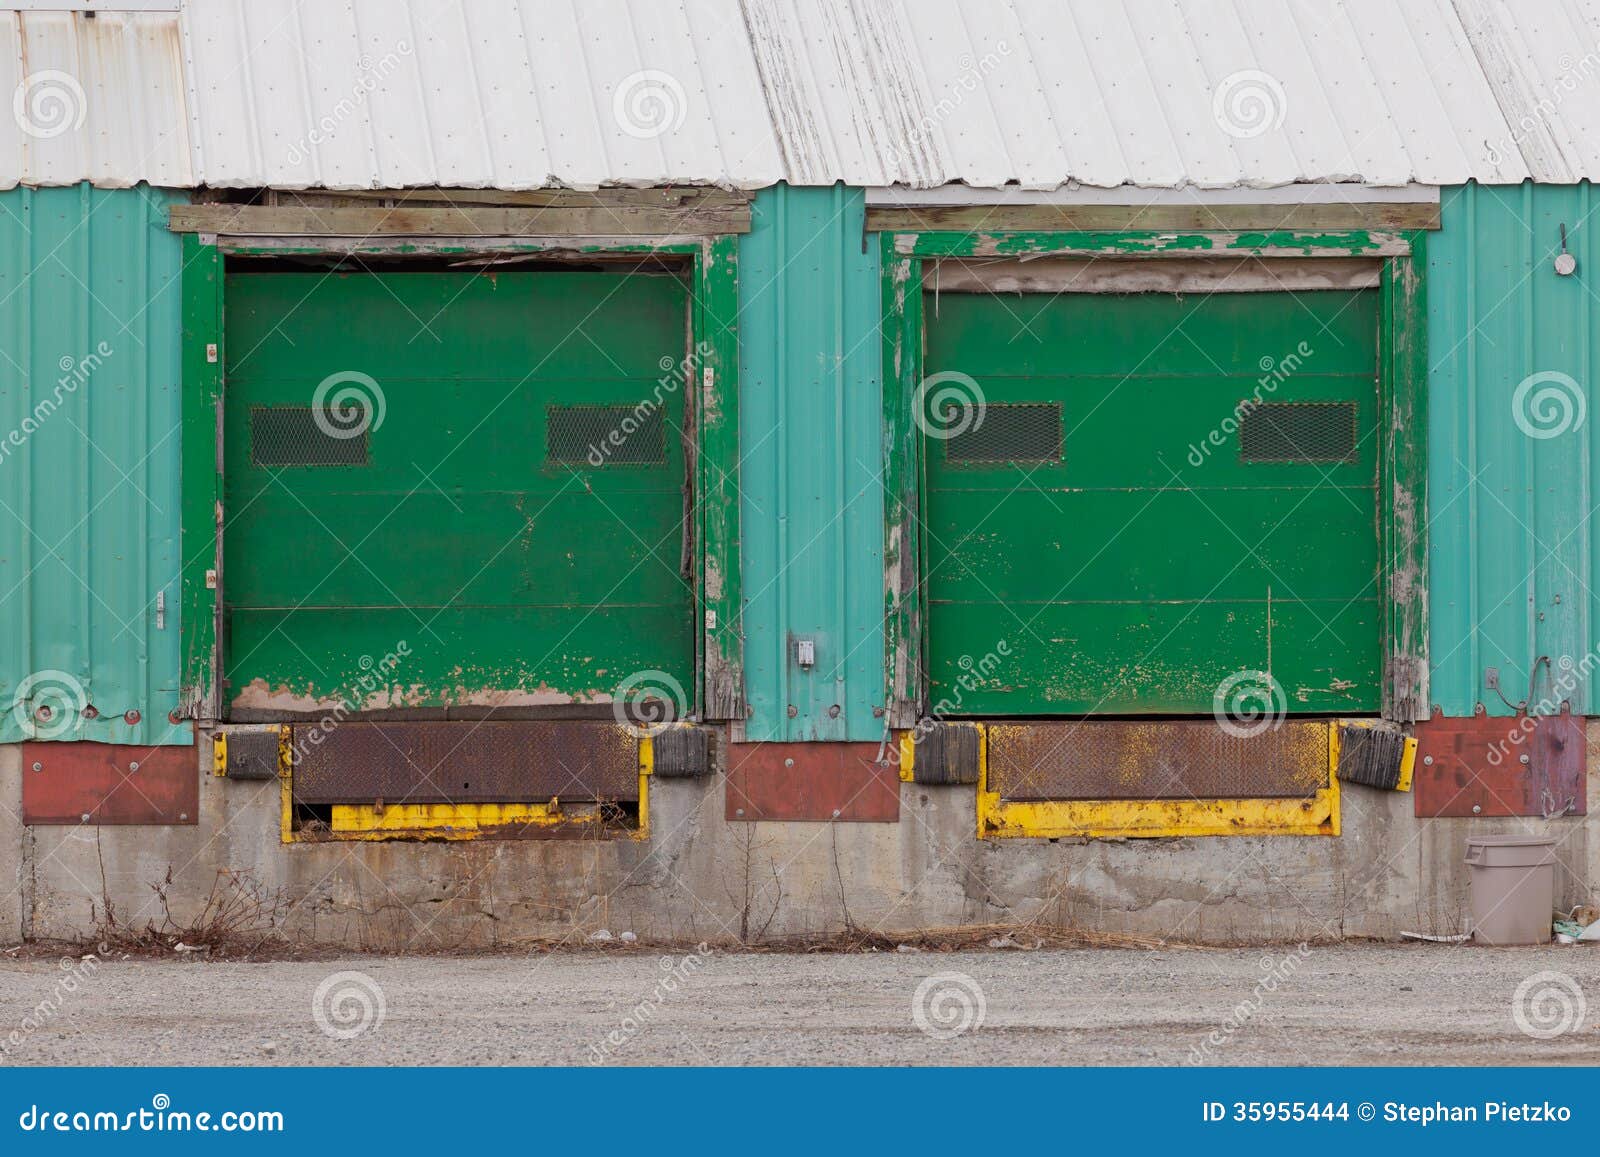 two green shuttered outside loading gate ramps